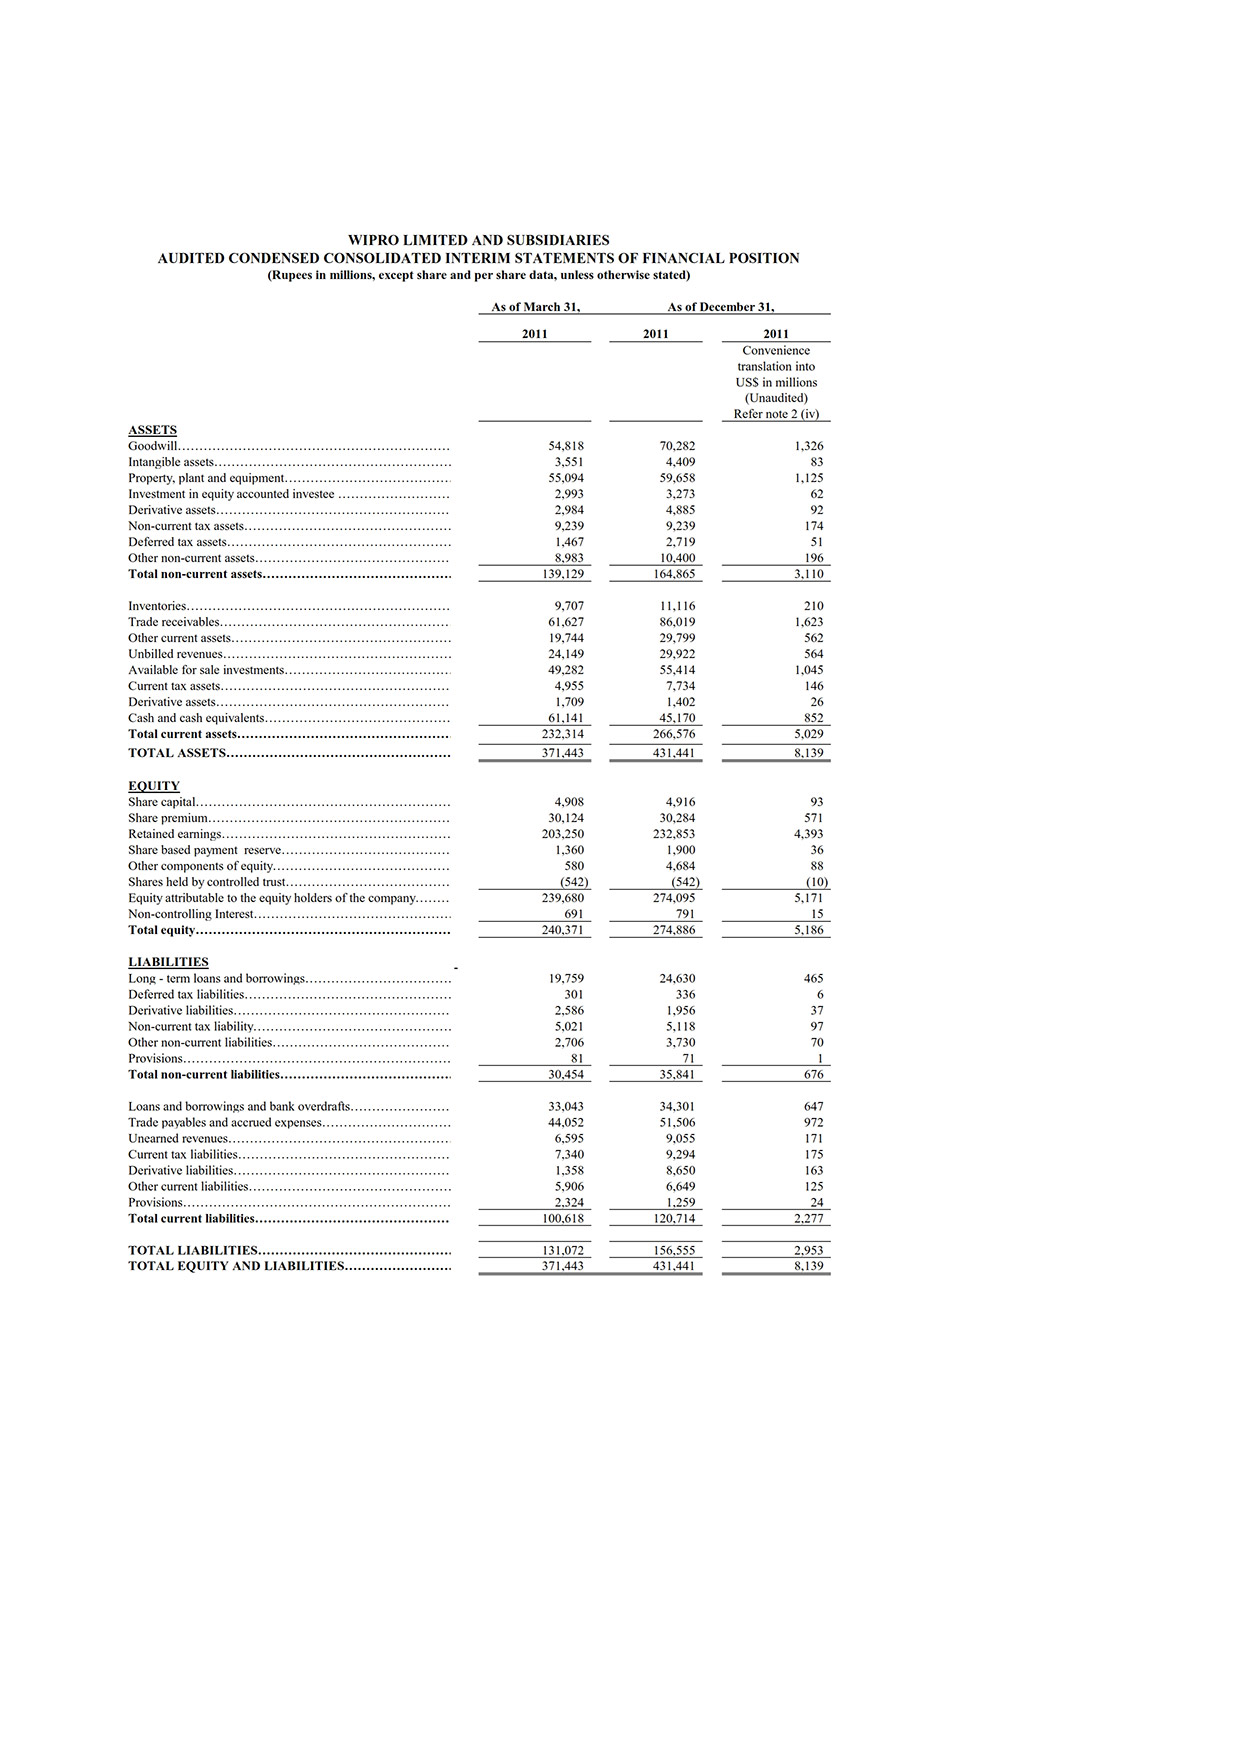 Results for the quarter ended December 31, 2011 under IFRS